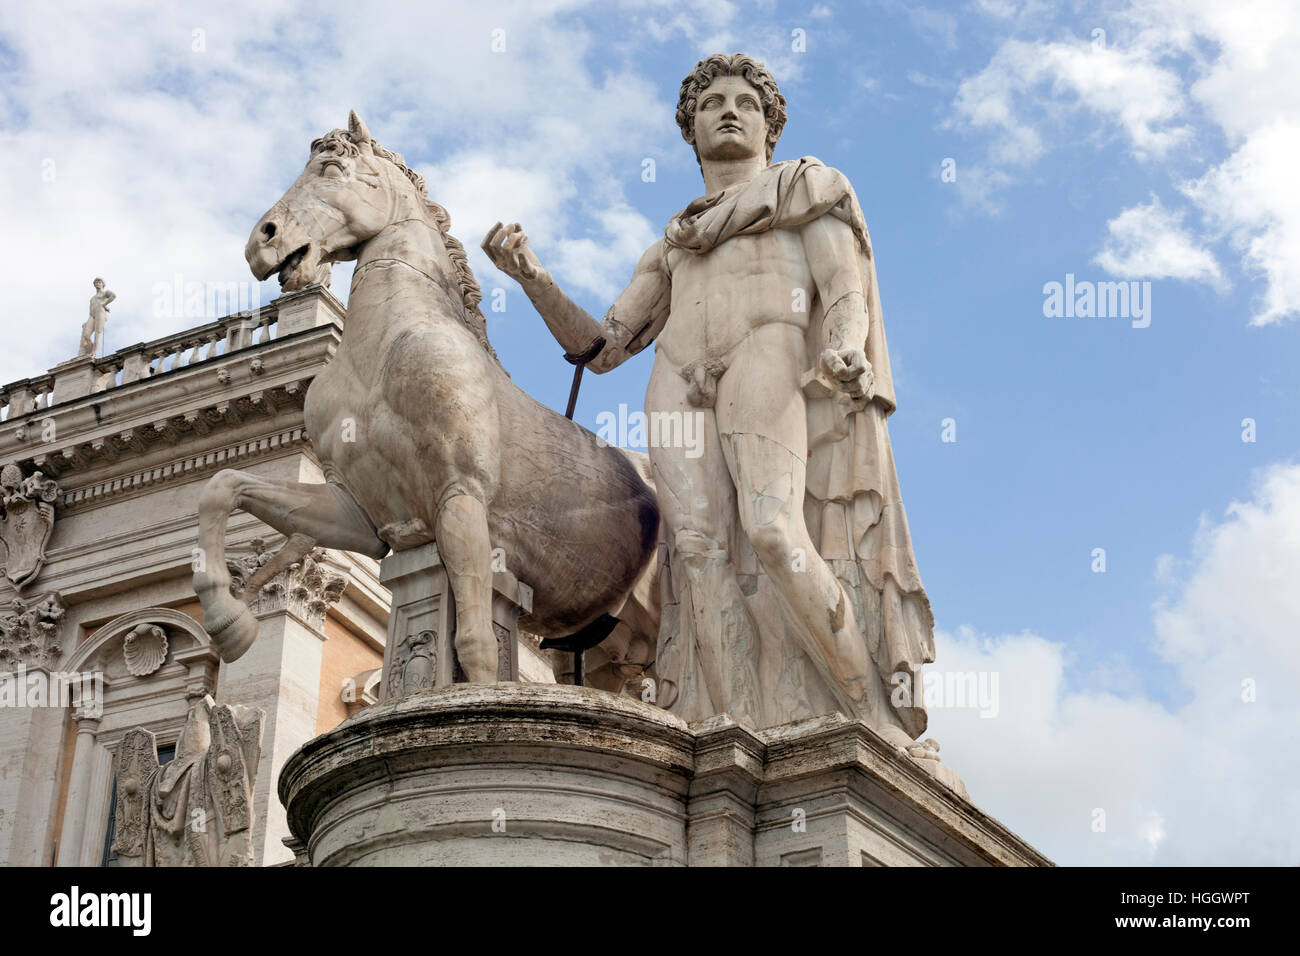 Statue of Castor at the Cordonata stairs to the Piazza del Campidoglio Square at the Capitoline Hill in Rome, Italy. Stock Photo